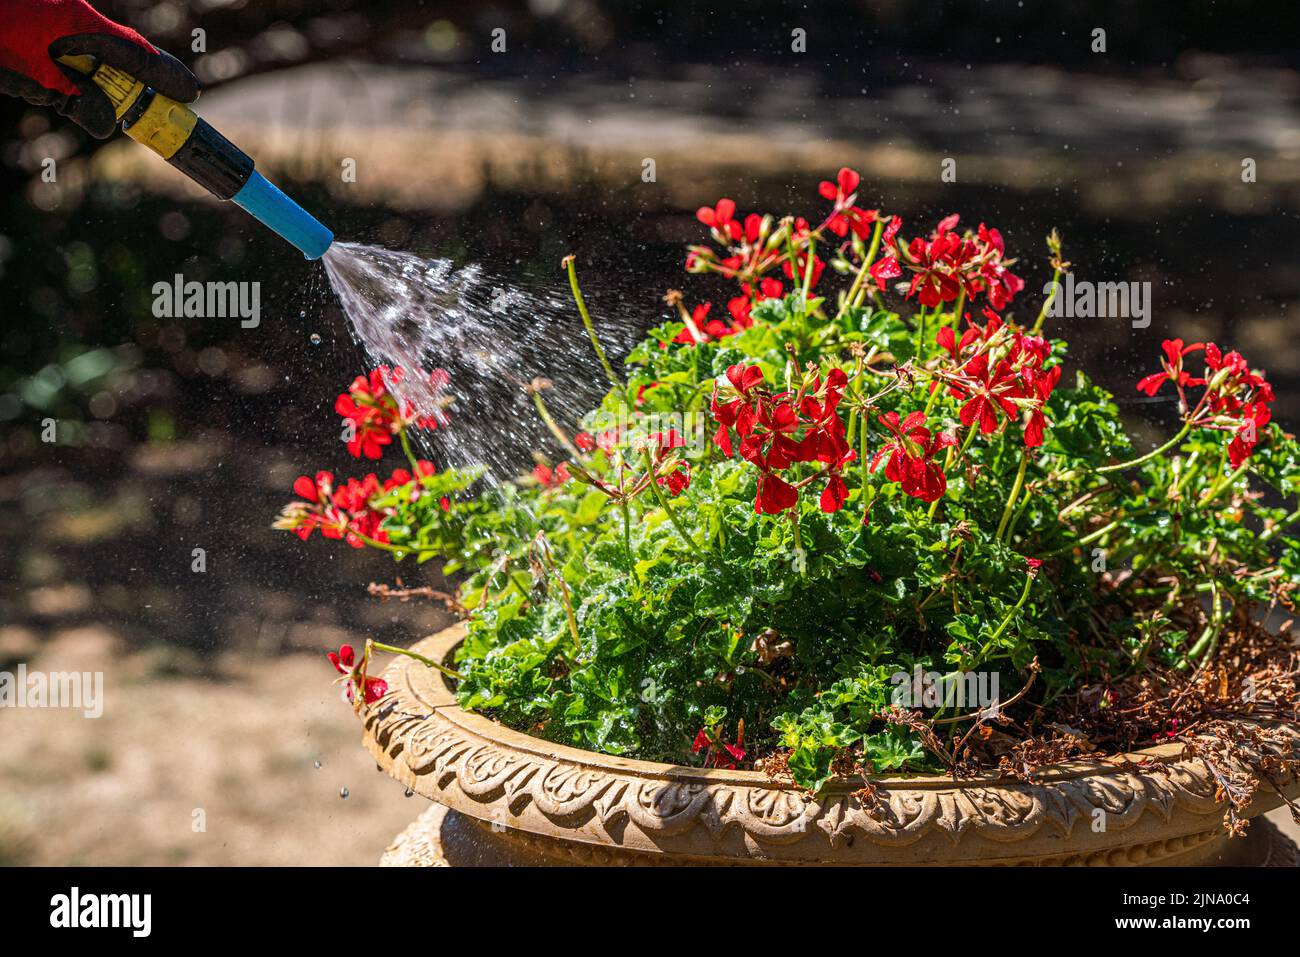 10 Agosto 2022: Planta de begonia de riego con boquilla de manguera de agua de jardín, Londres, Reino Unido Foto de stock